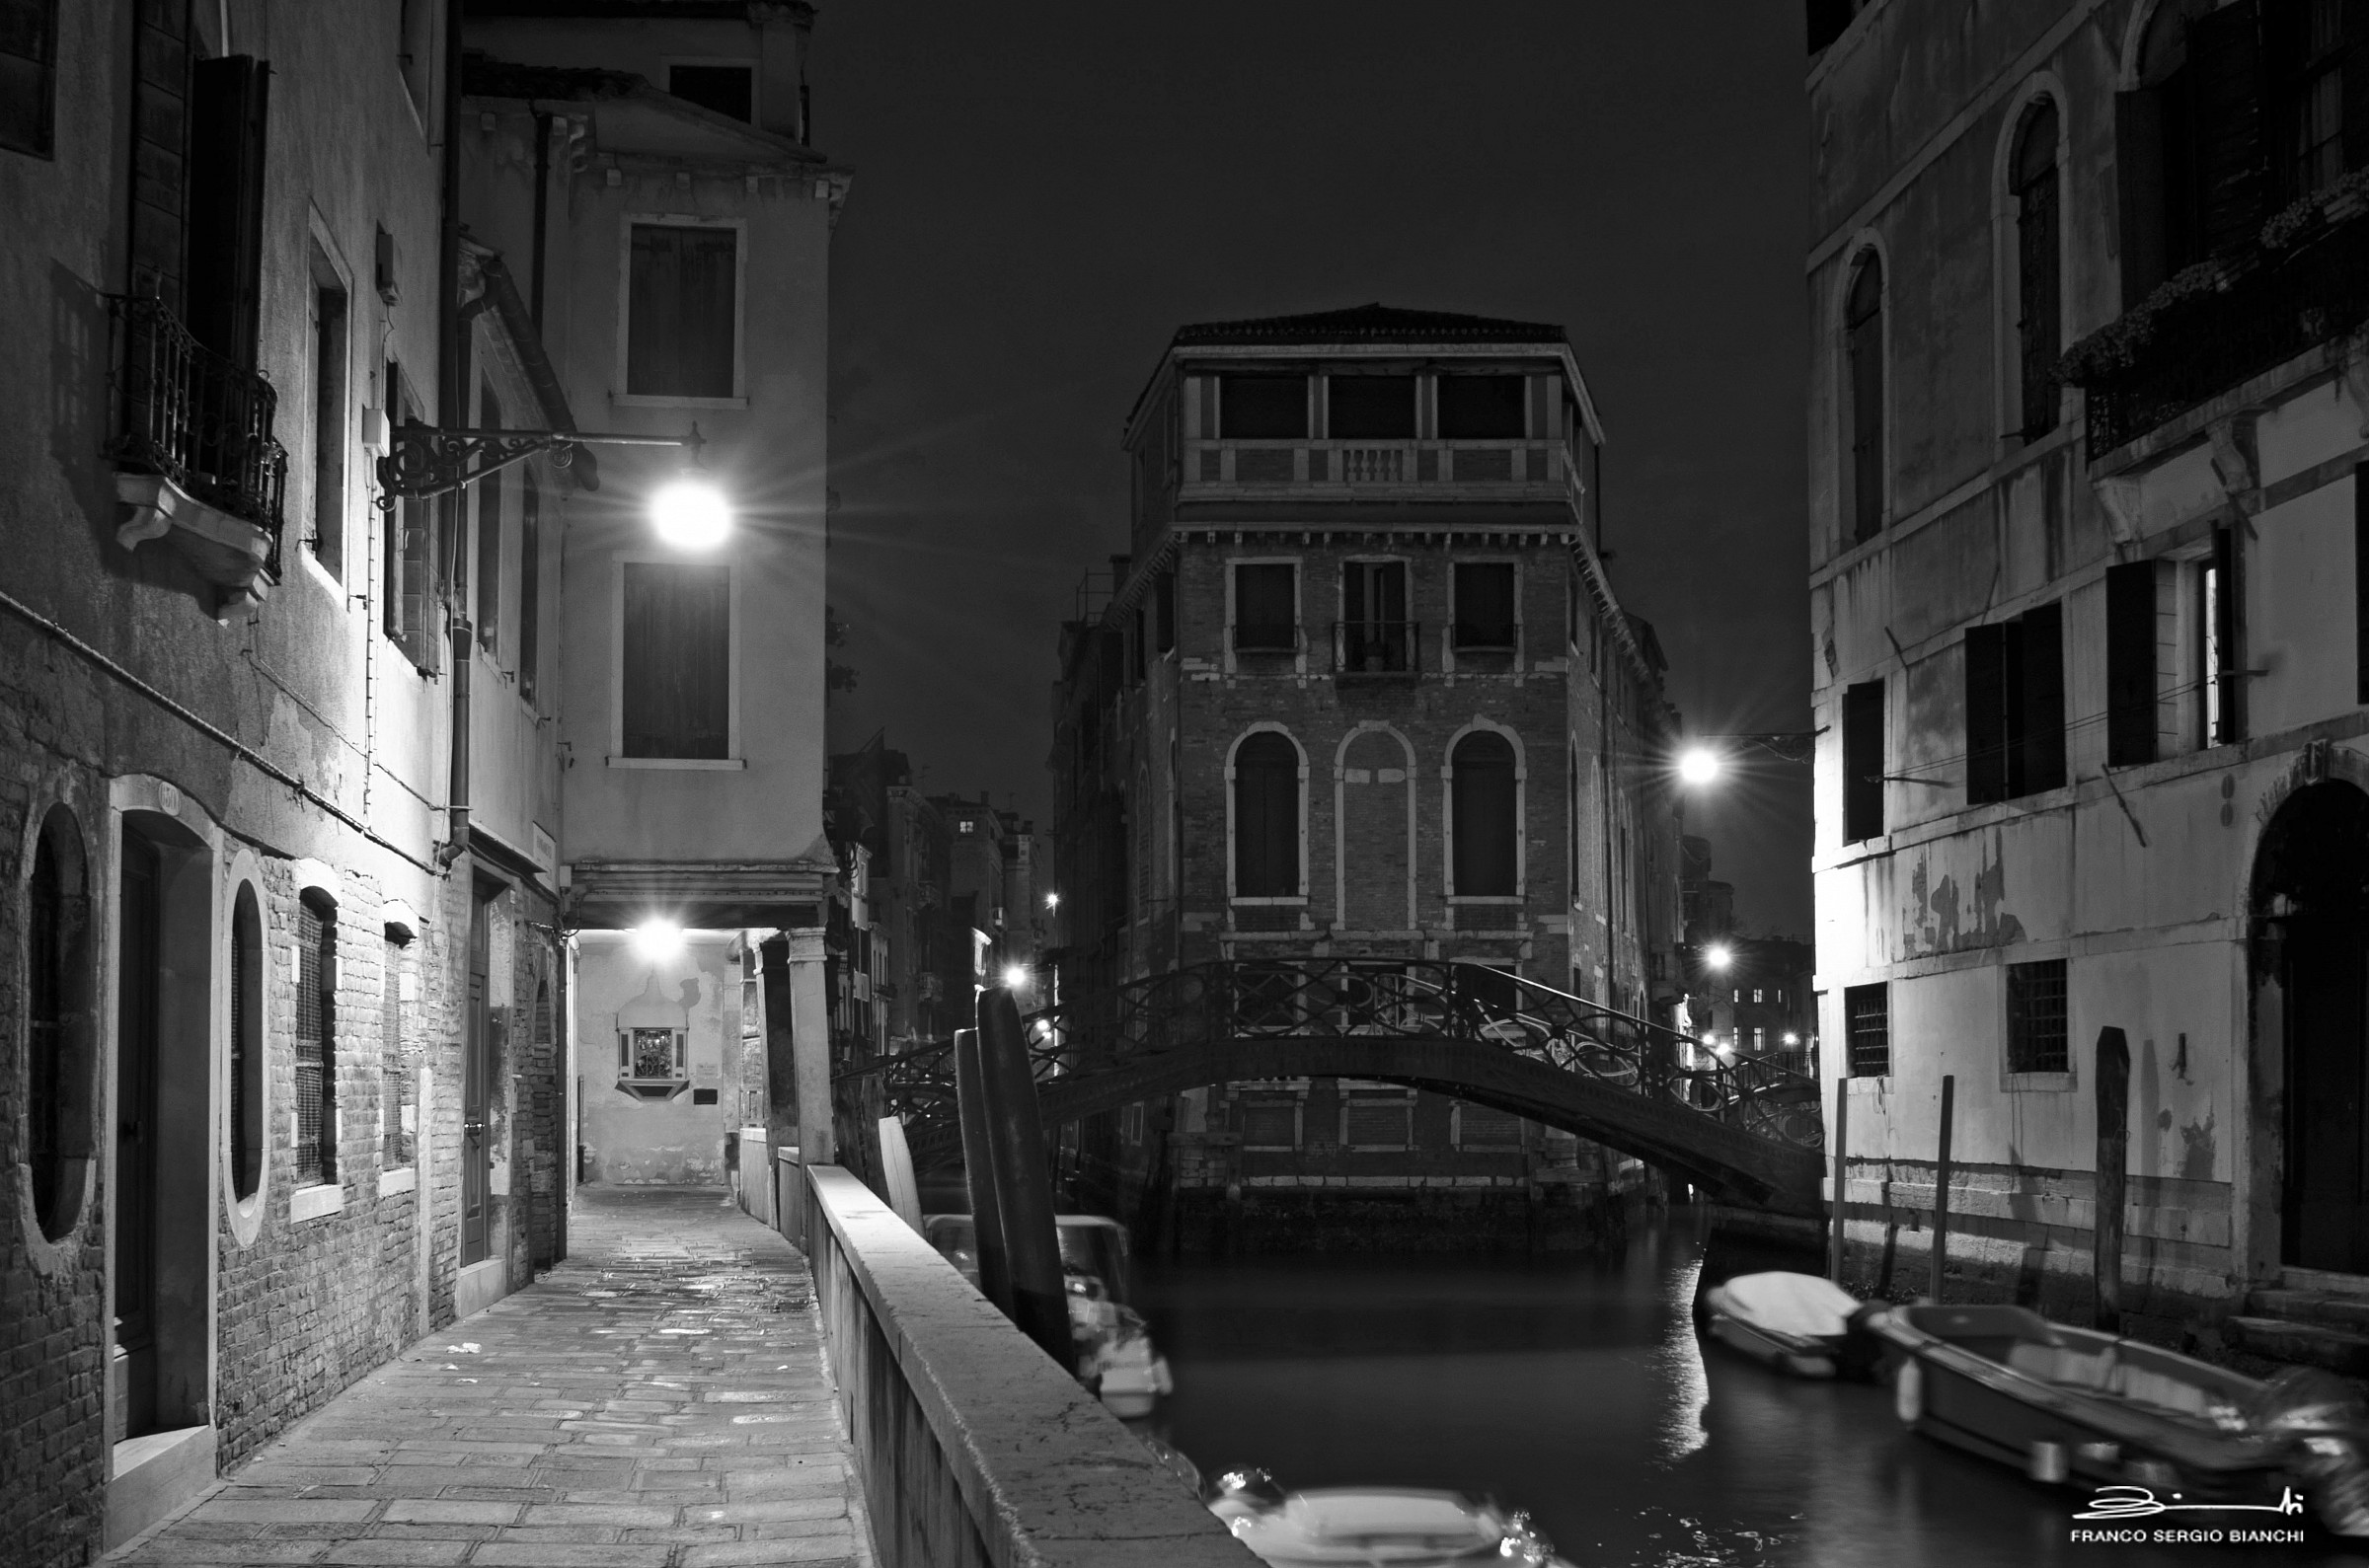 The corner house - Venice...